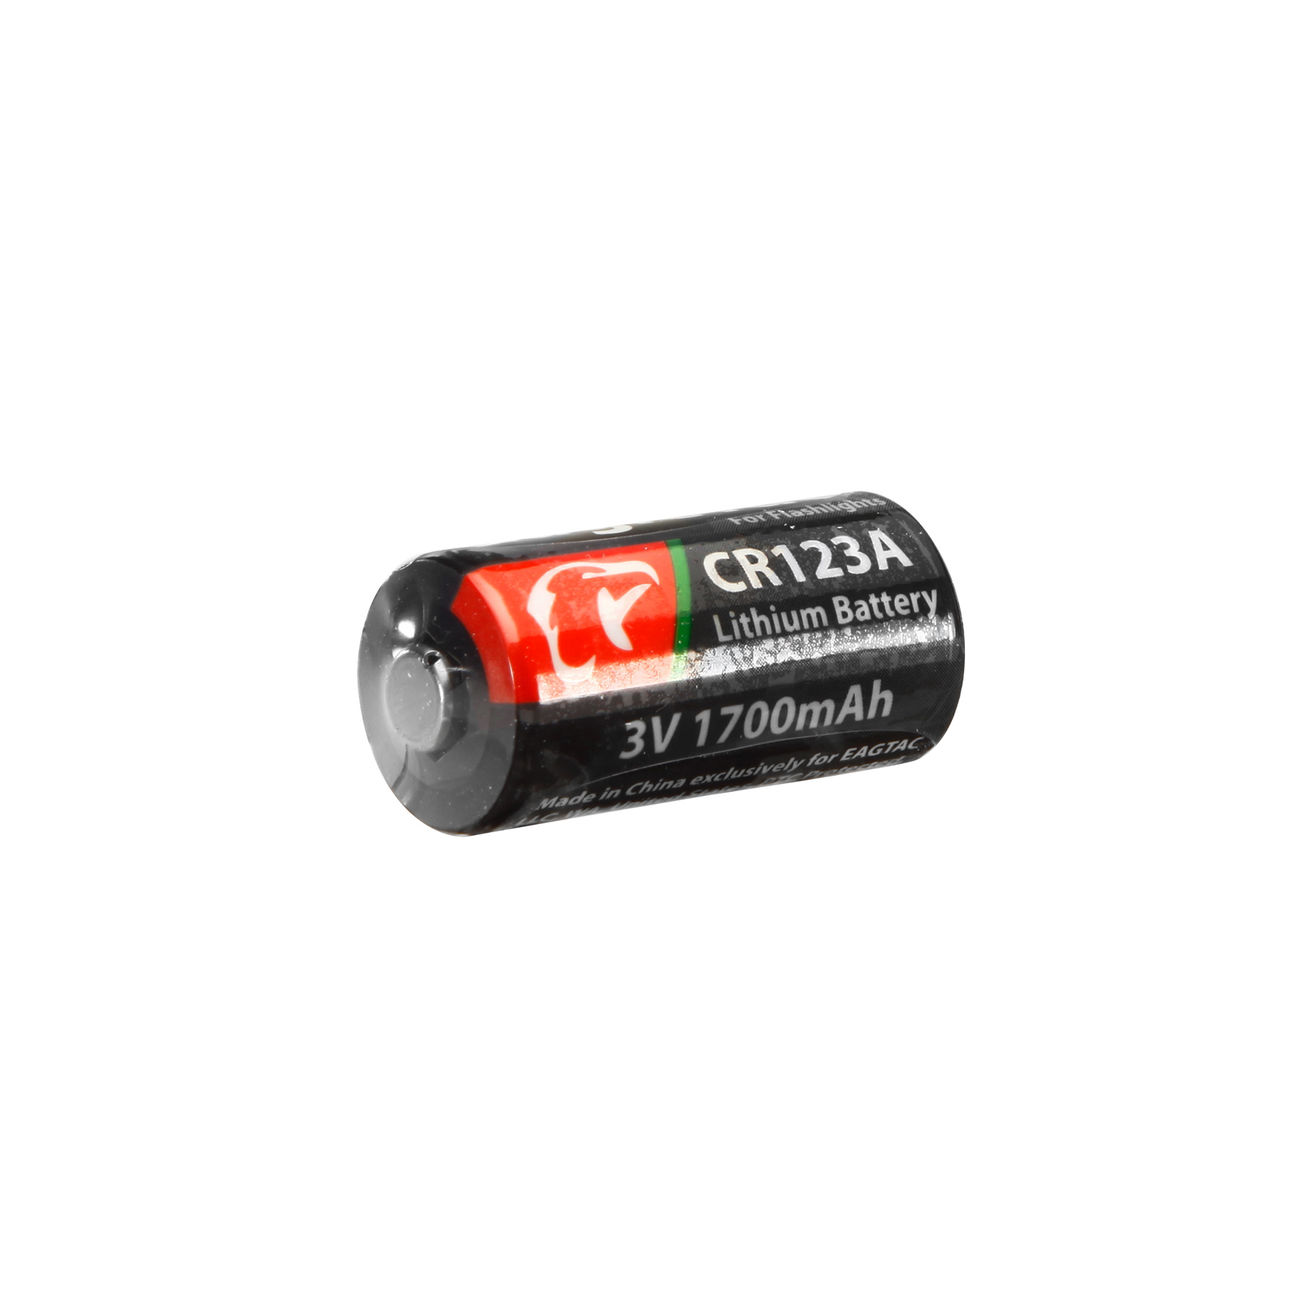 EAGTAC CR123 Lithium Batterie 1700mAh